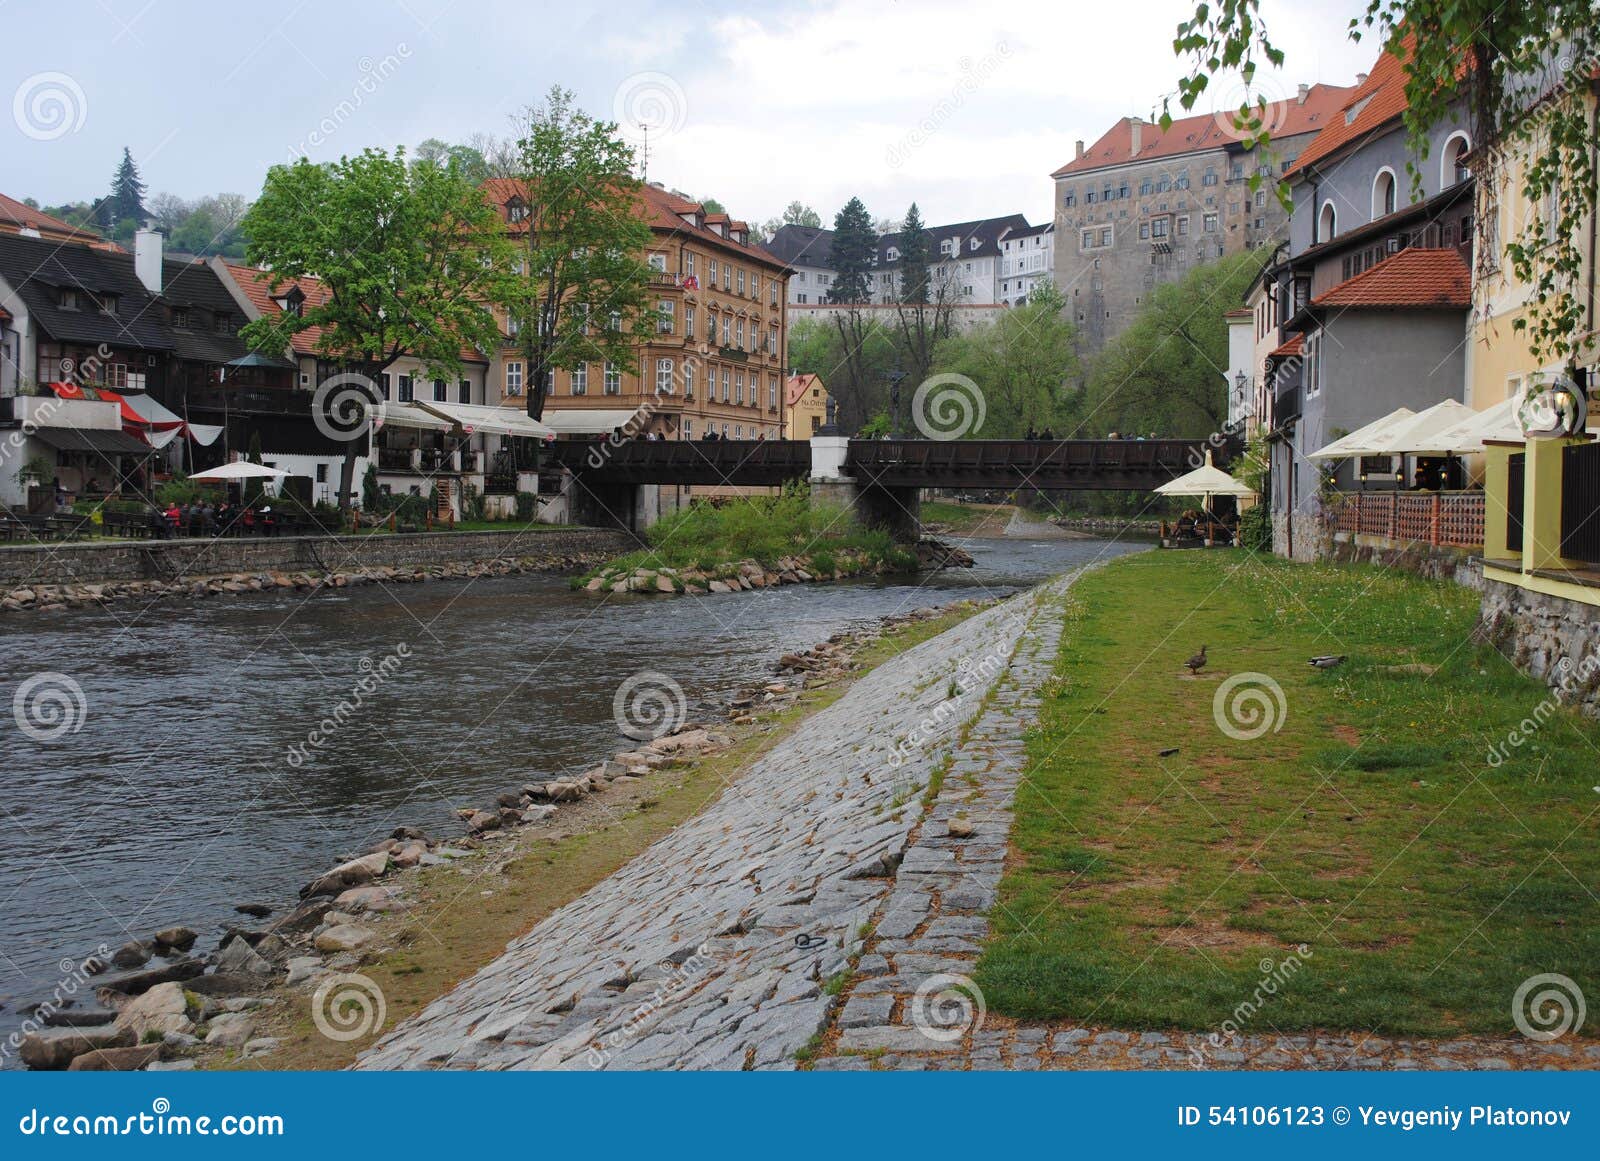 Fluss und Brücke in Cesky Krumlov. Frühlingsstadt und nasses Schloss